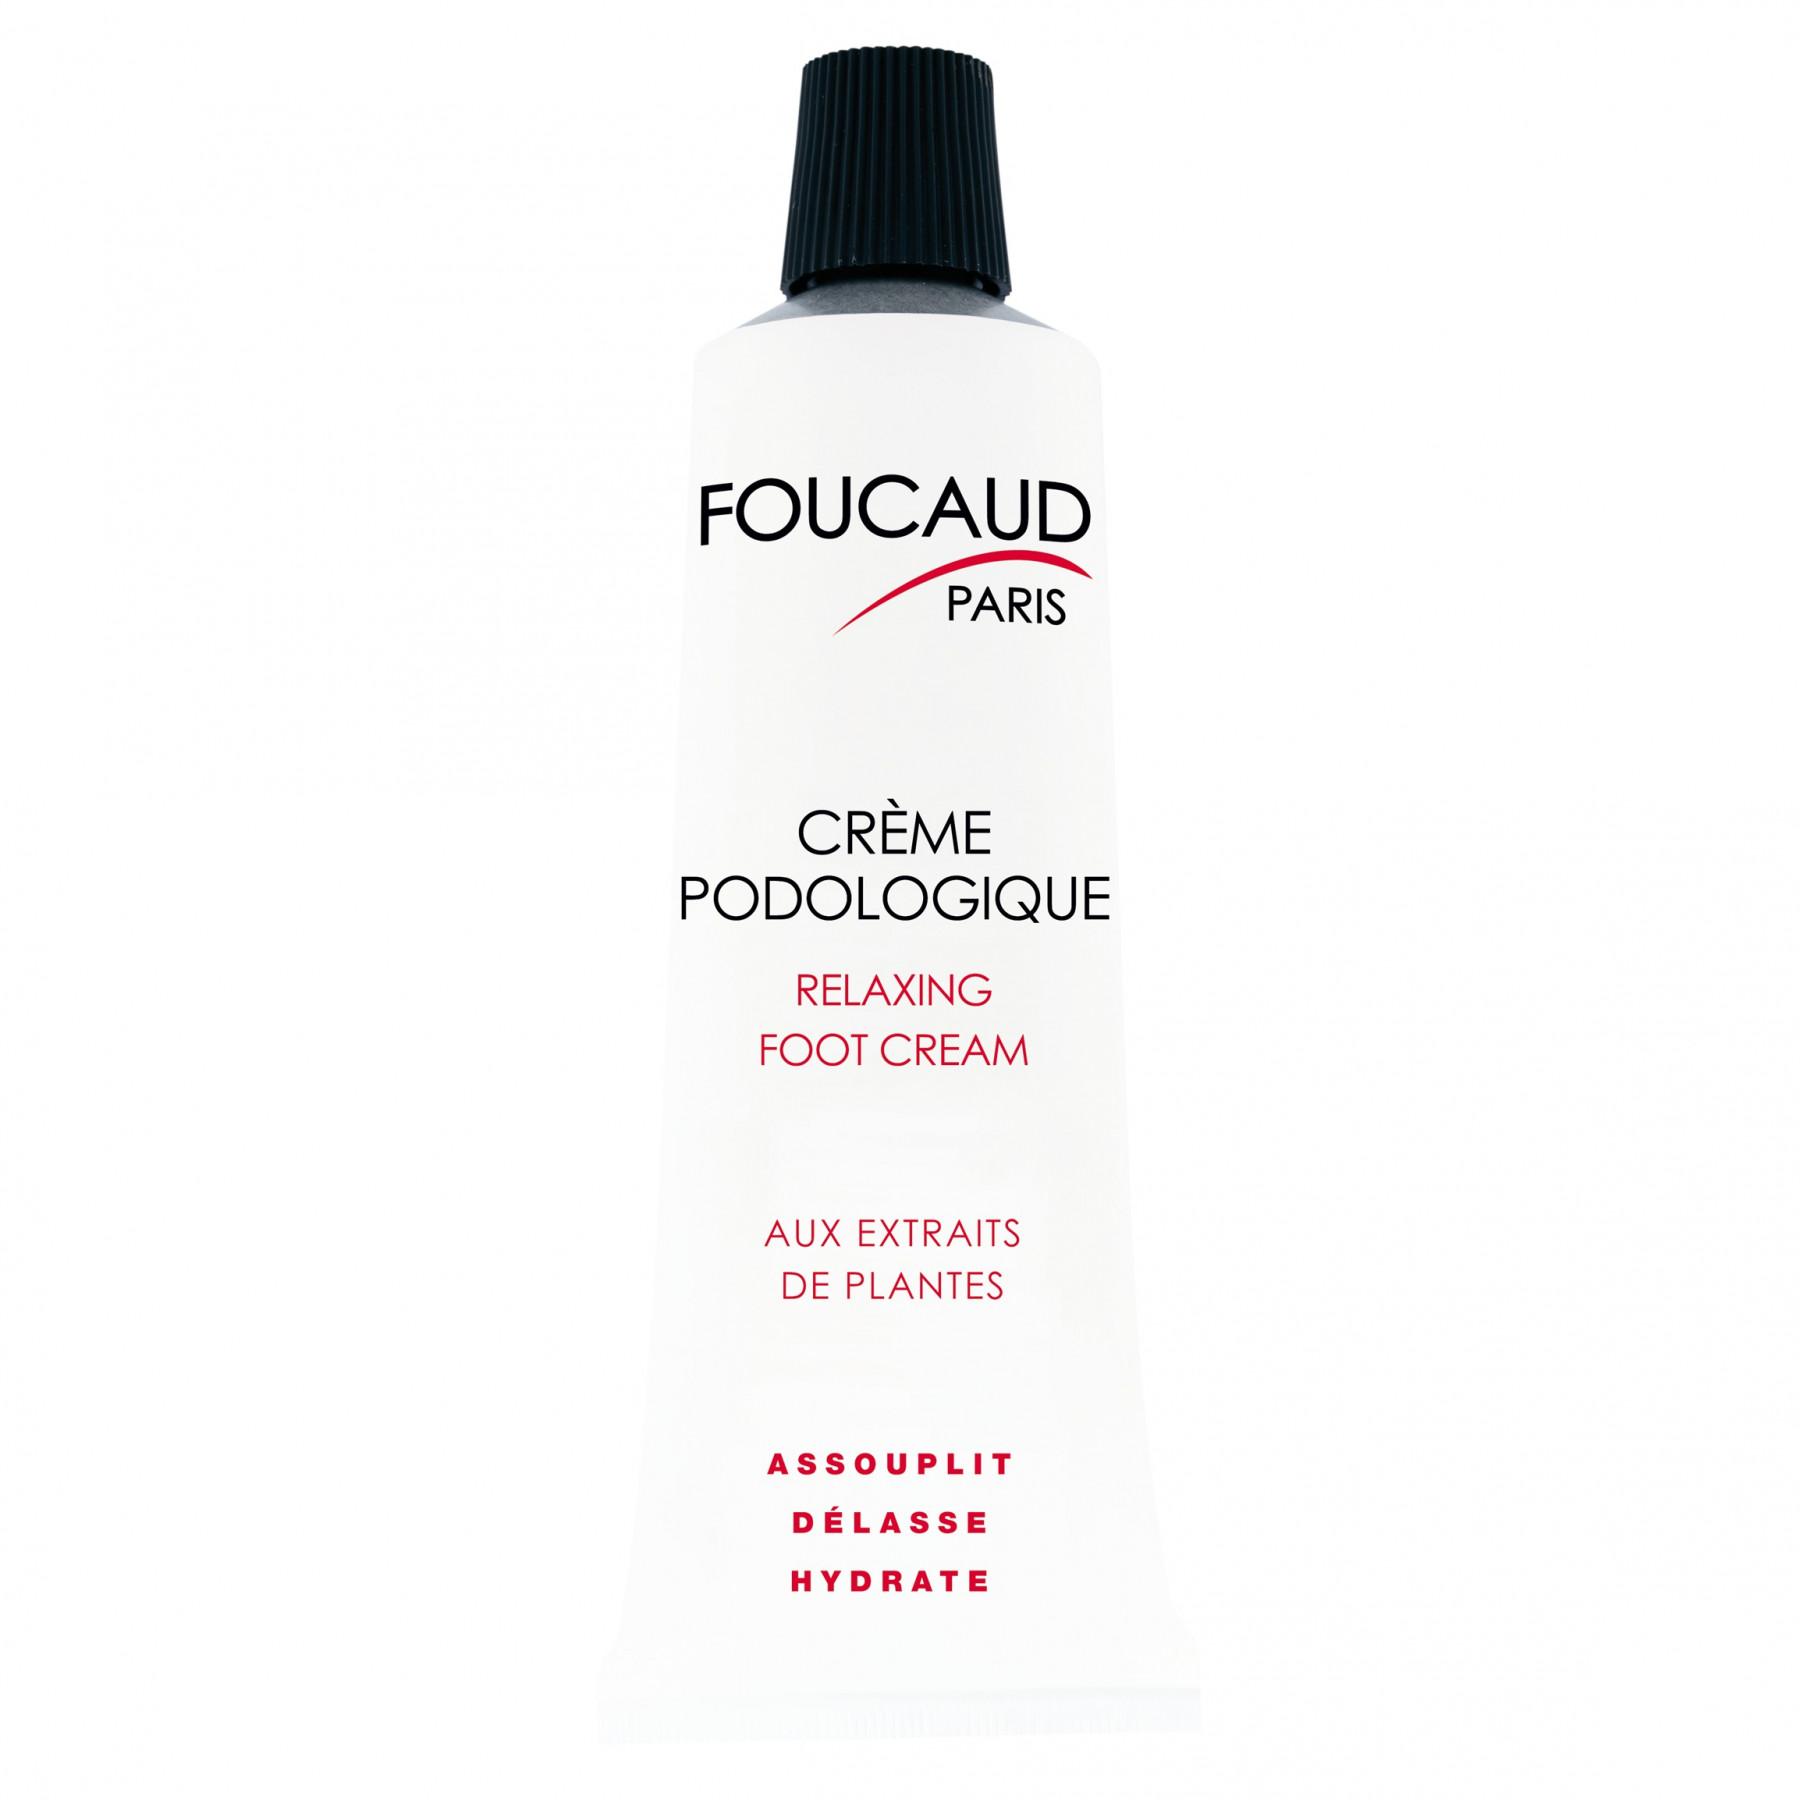 Crème podologique Foucaud tube 50g